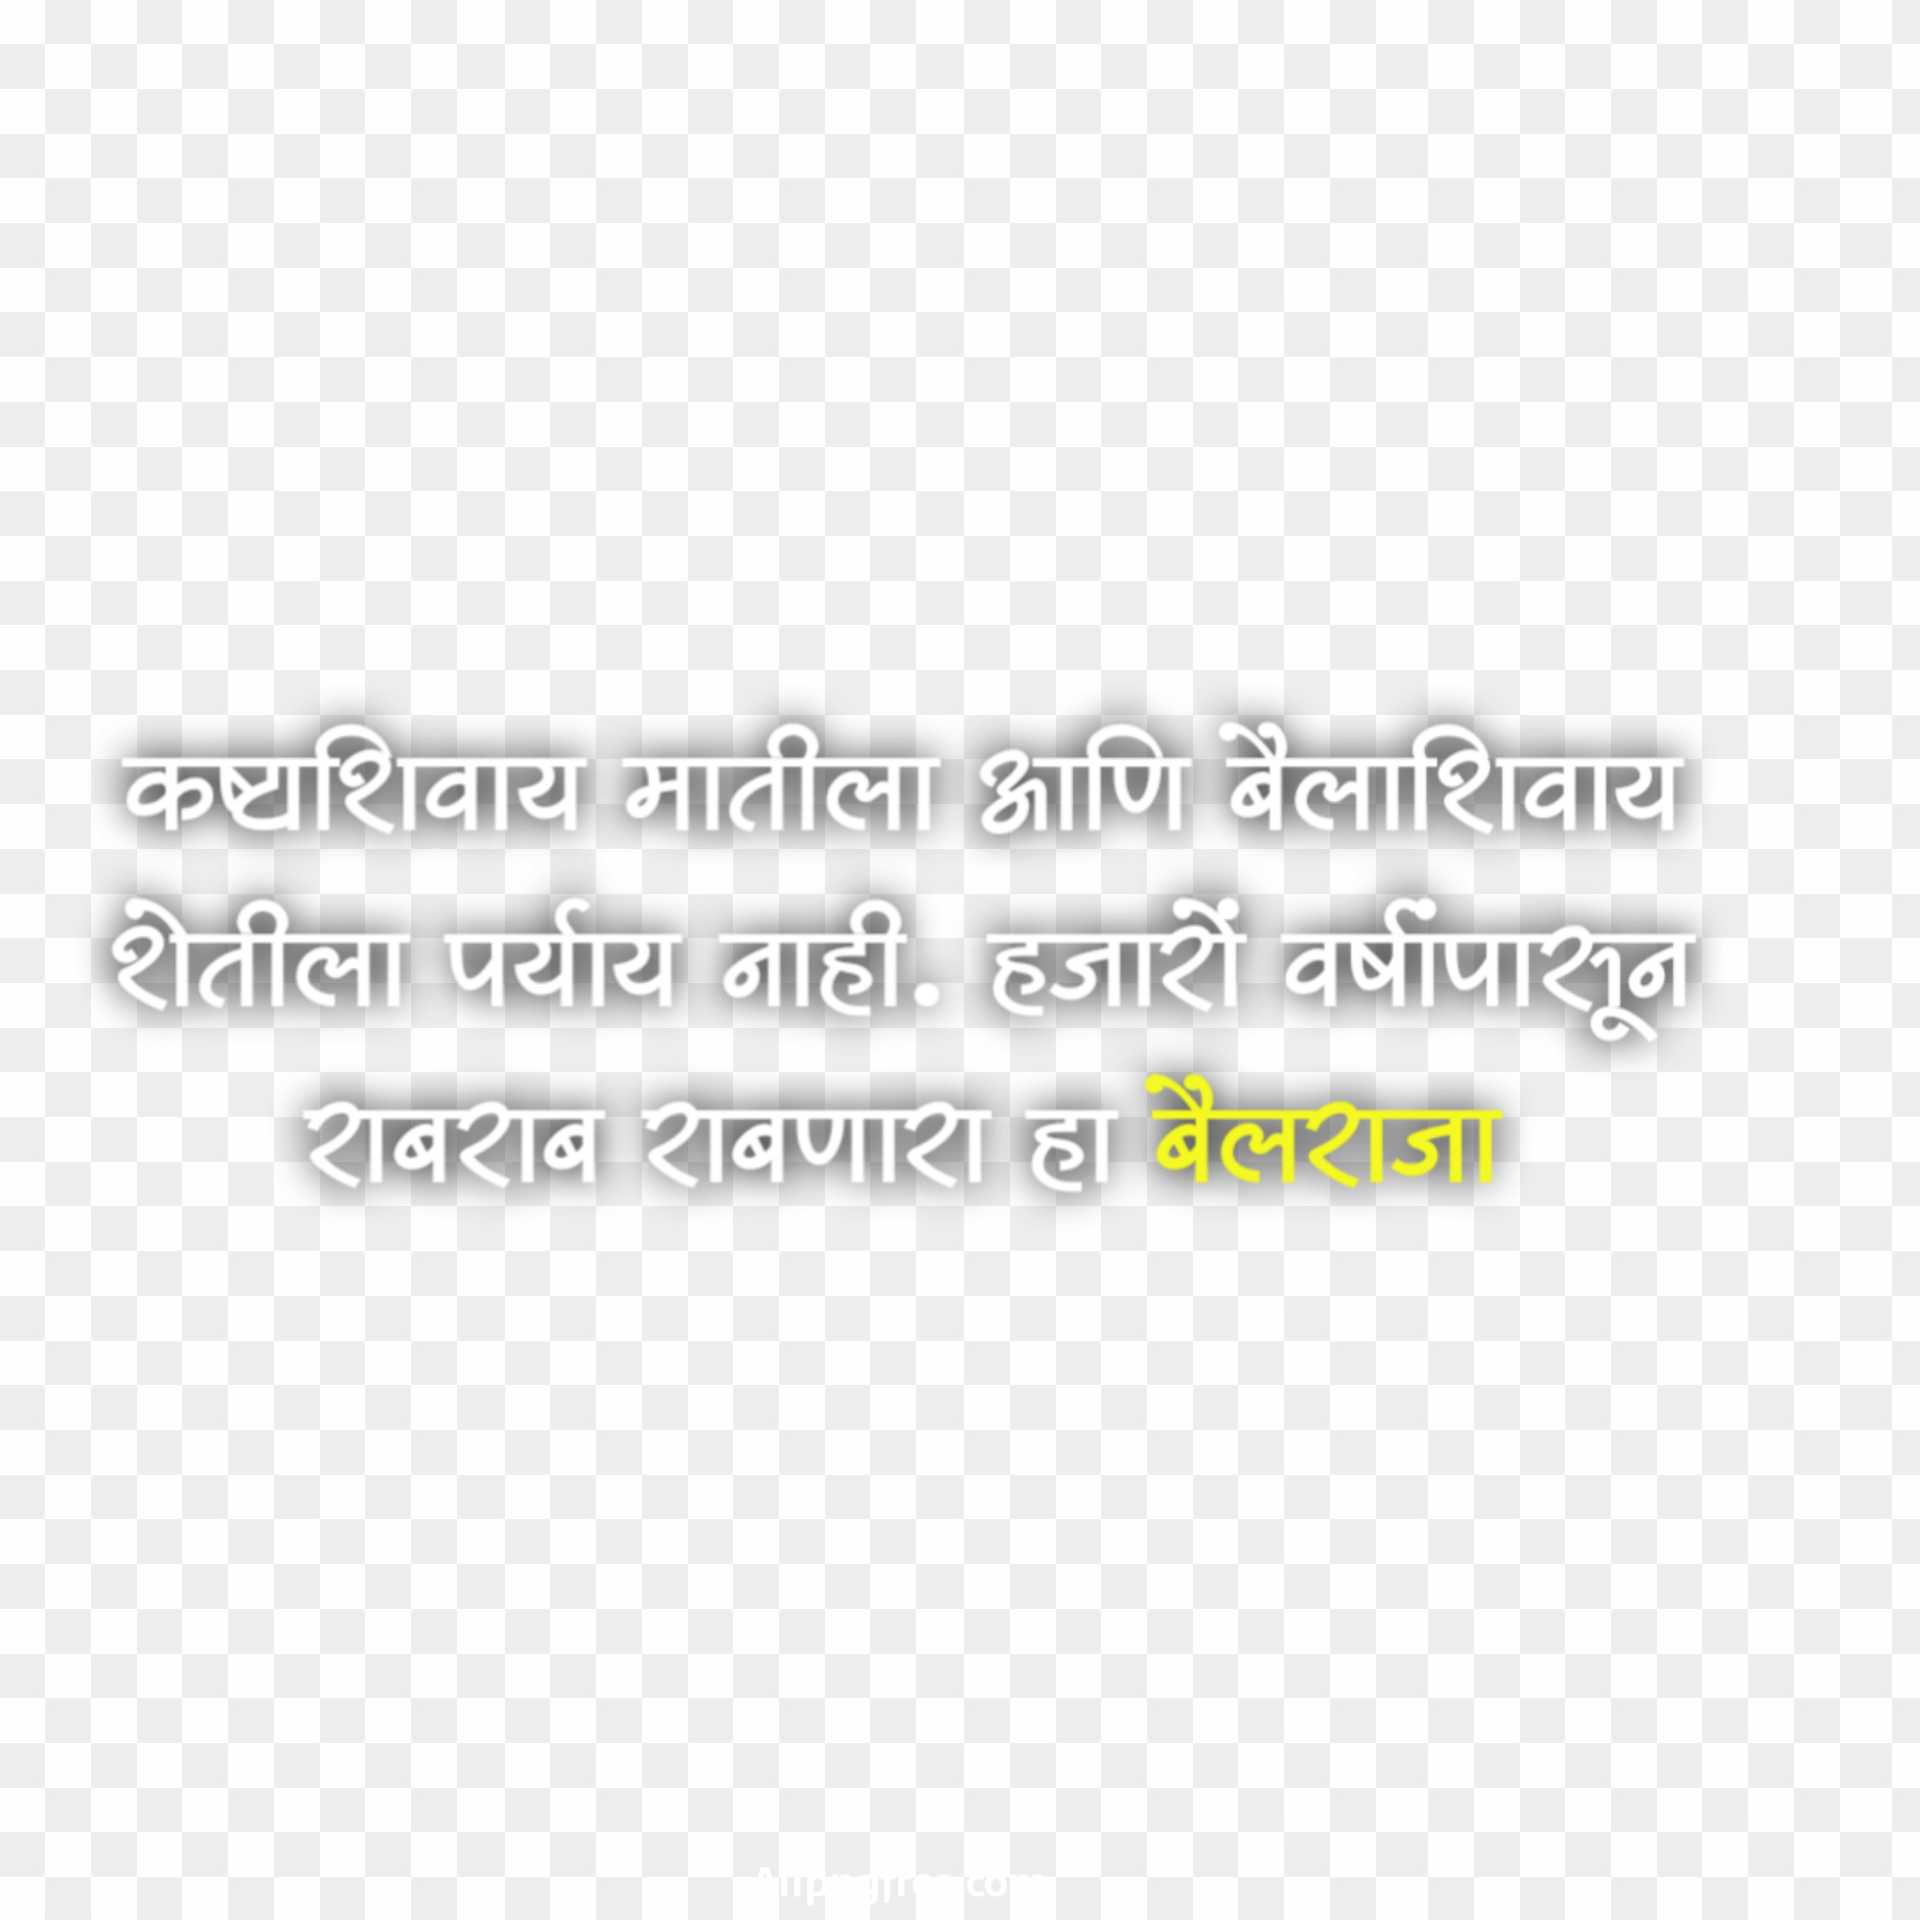 Bail Pola quotes in Hindi text PNG 